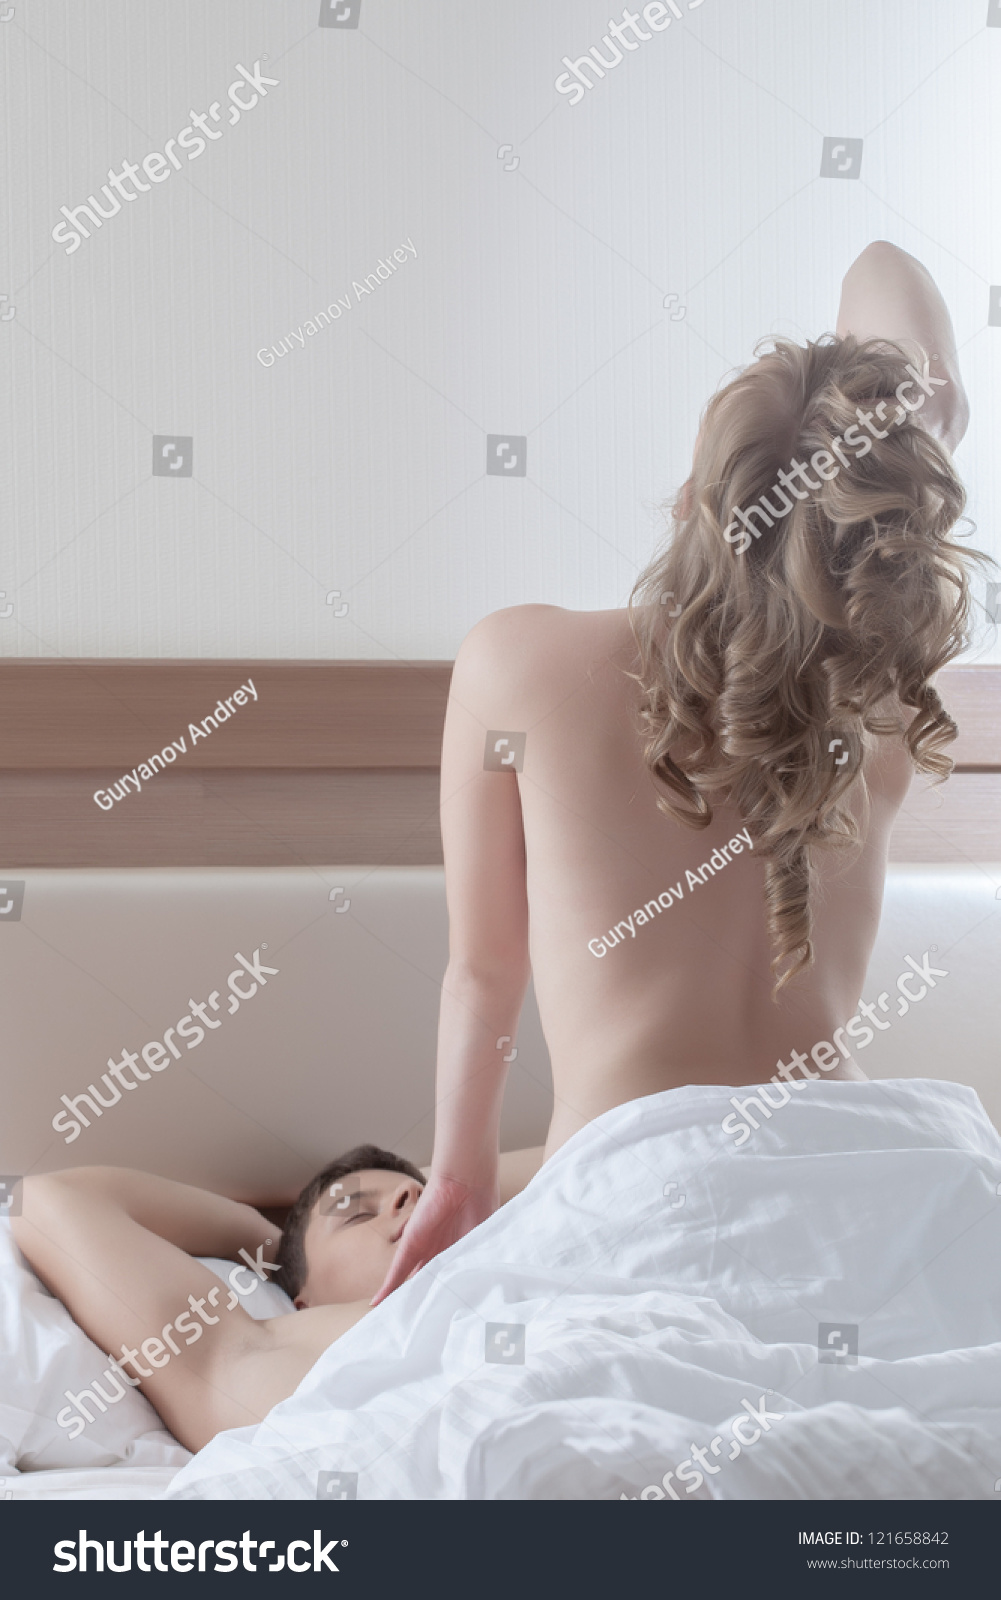 People Having Sex In Hotel 51